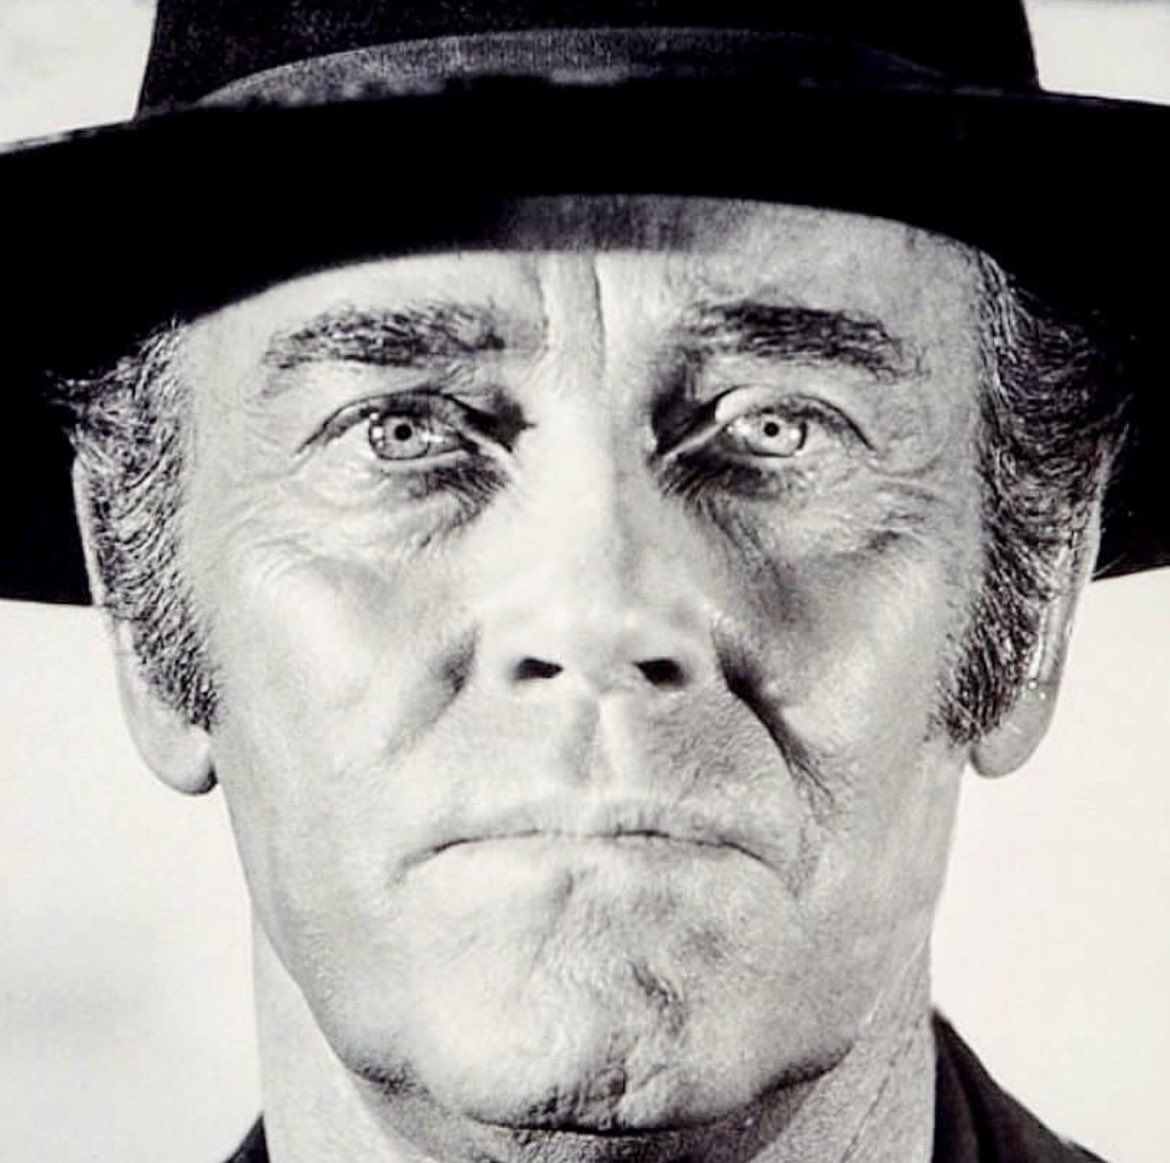 Henry Fonda as Frank. 
— Once Upon a Time in the West —
— 1968 — 
#iletaitunefoisdanslouest #onceuponatimeinthewest #sergioleone #henryfonda #masterpiece #moviemasterpiece #western #cinematography #annees60 #60s #60smovies